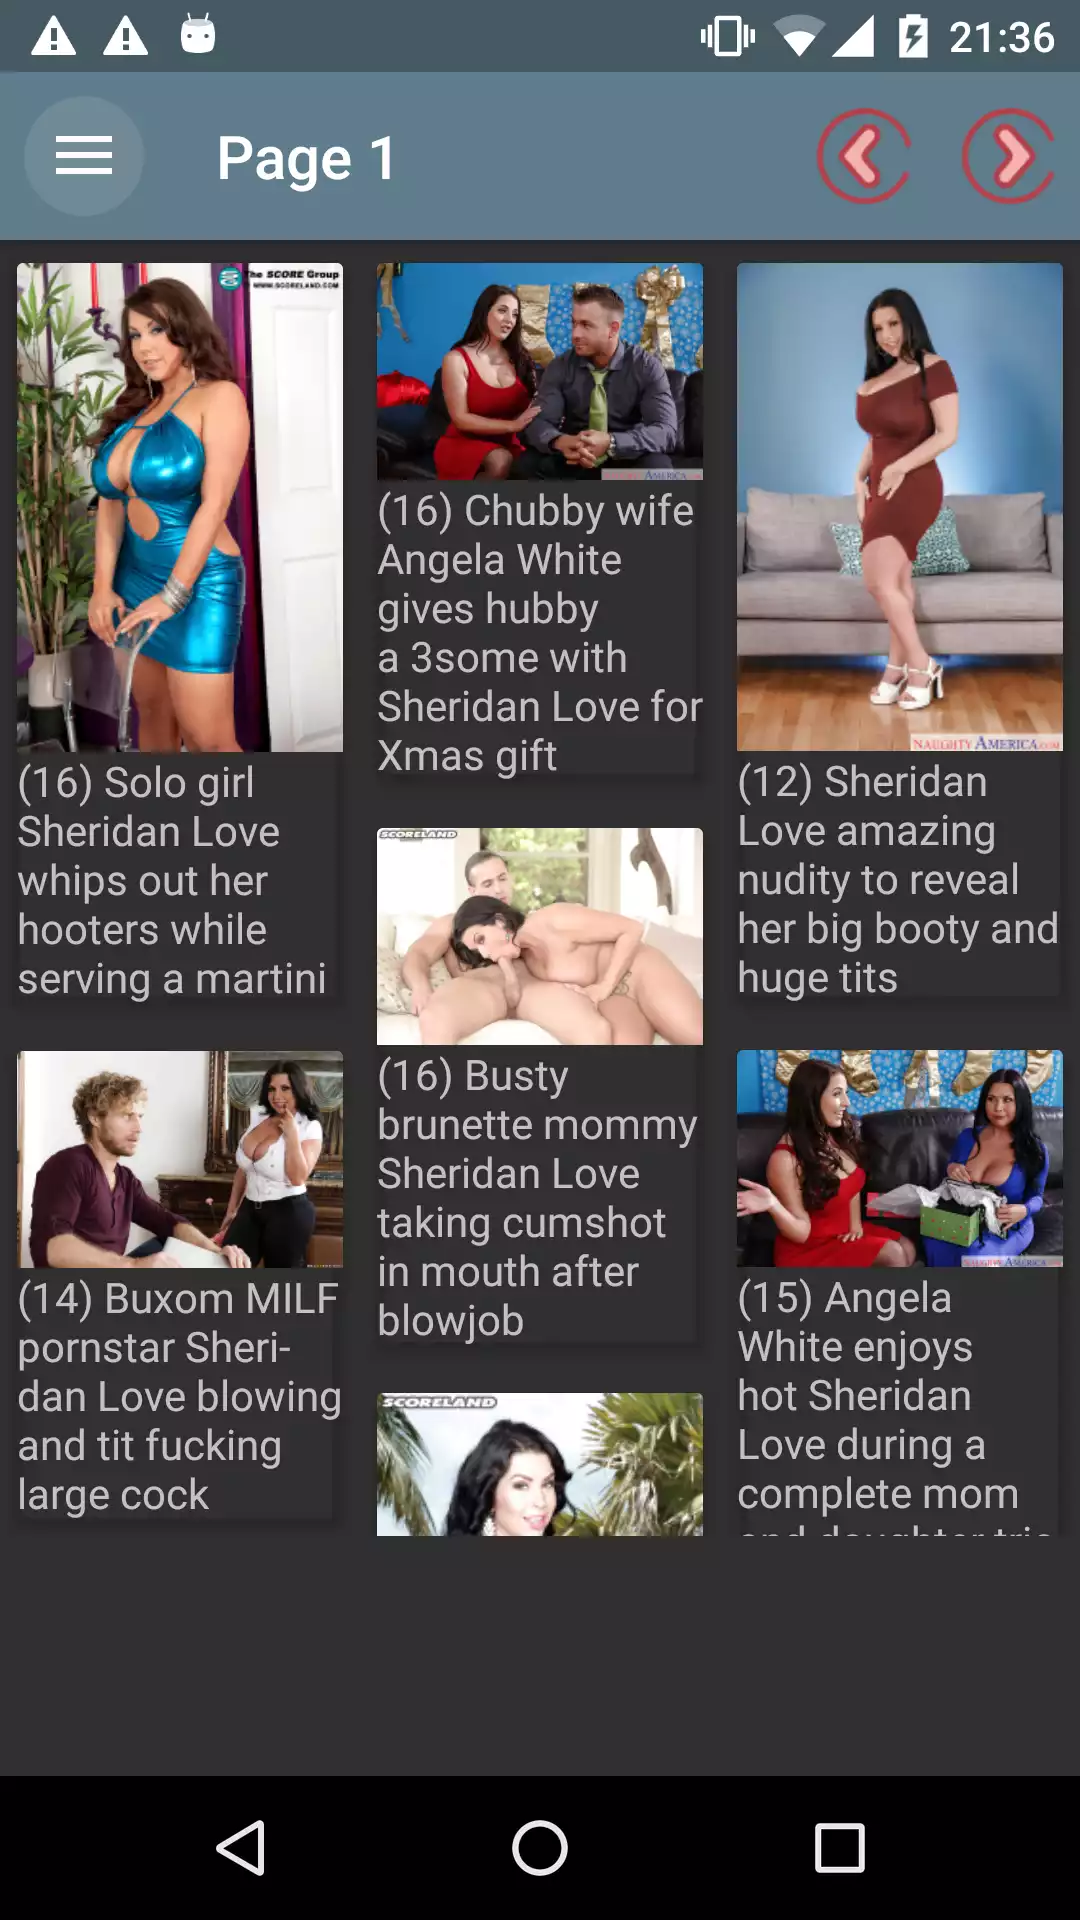 Sheridan Love futanari,black,watching,galleries,hentai,pornstar,sexy,download,how,porn,photos,pic,pics,gay,baixar,for,hot,app,apk,apps